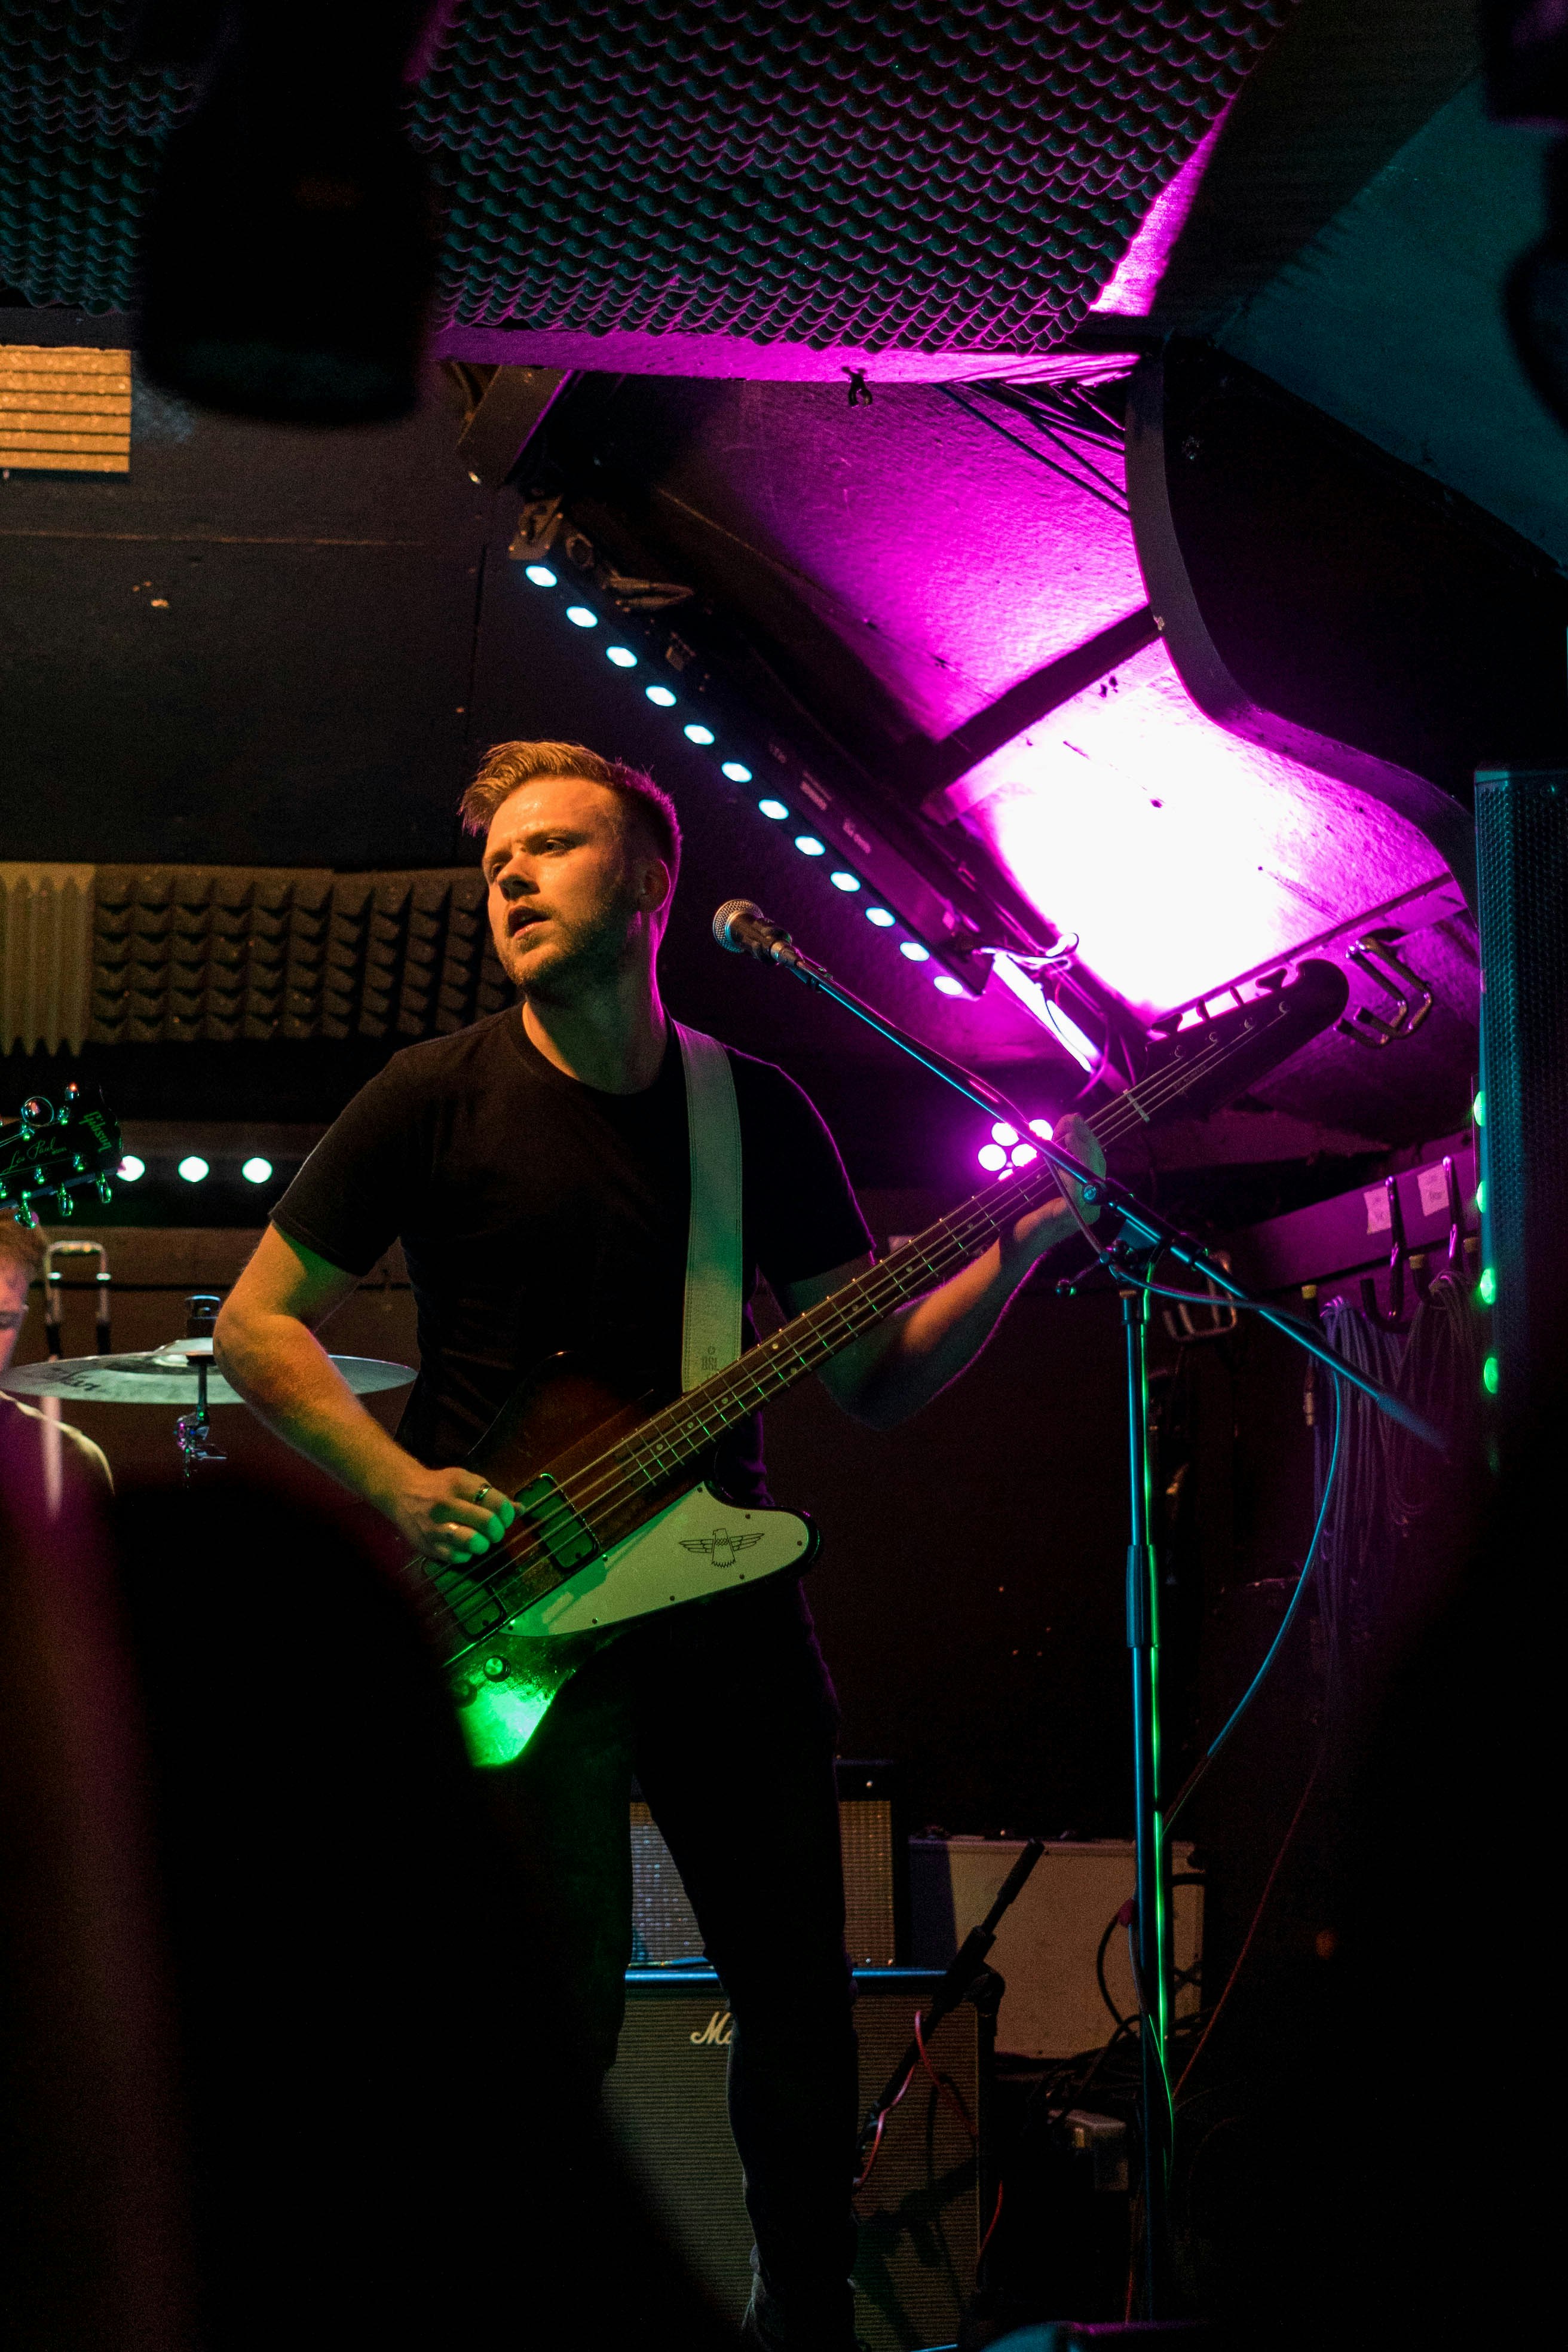 man in black t-shirt playing electric guitar